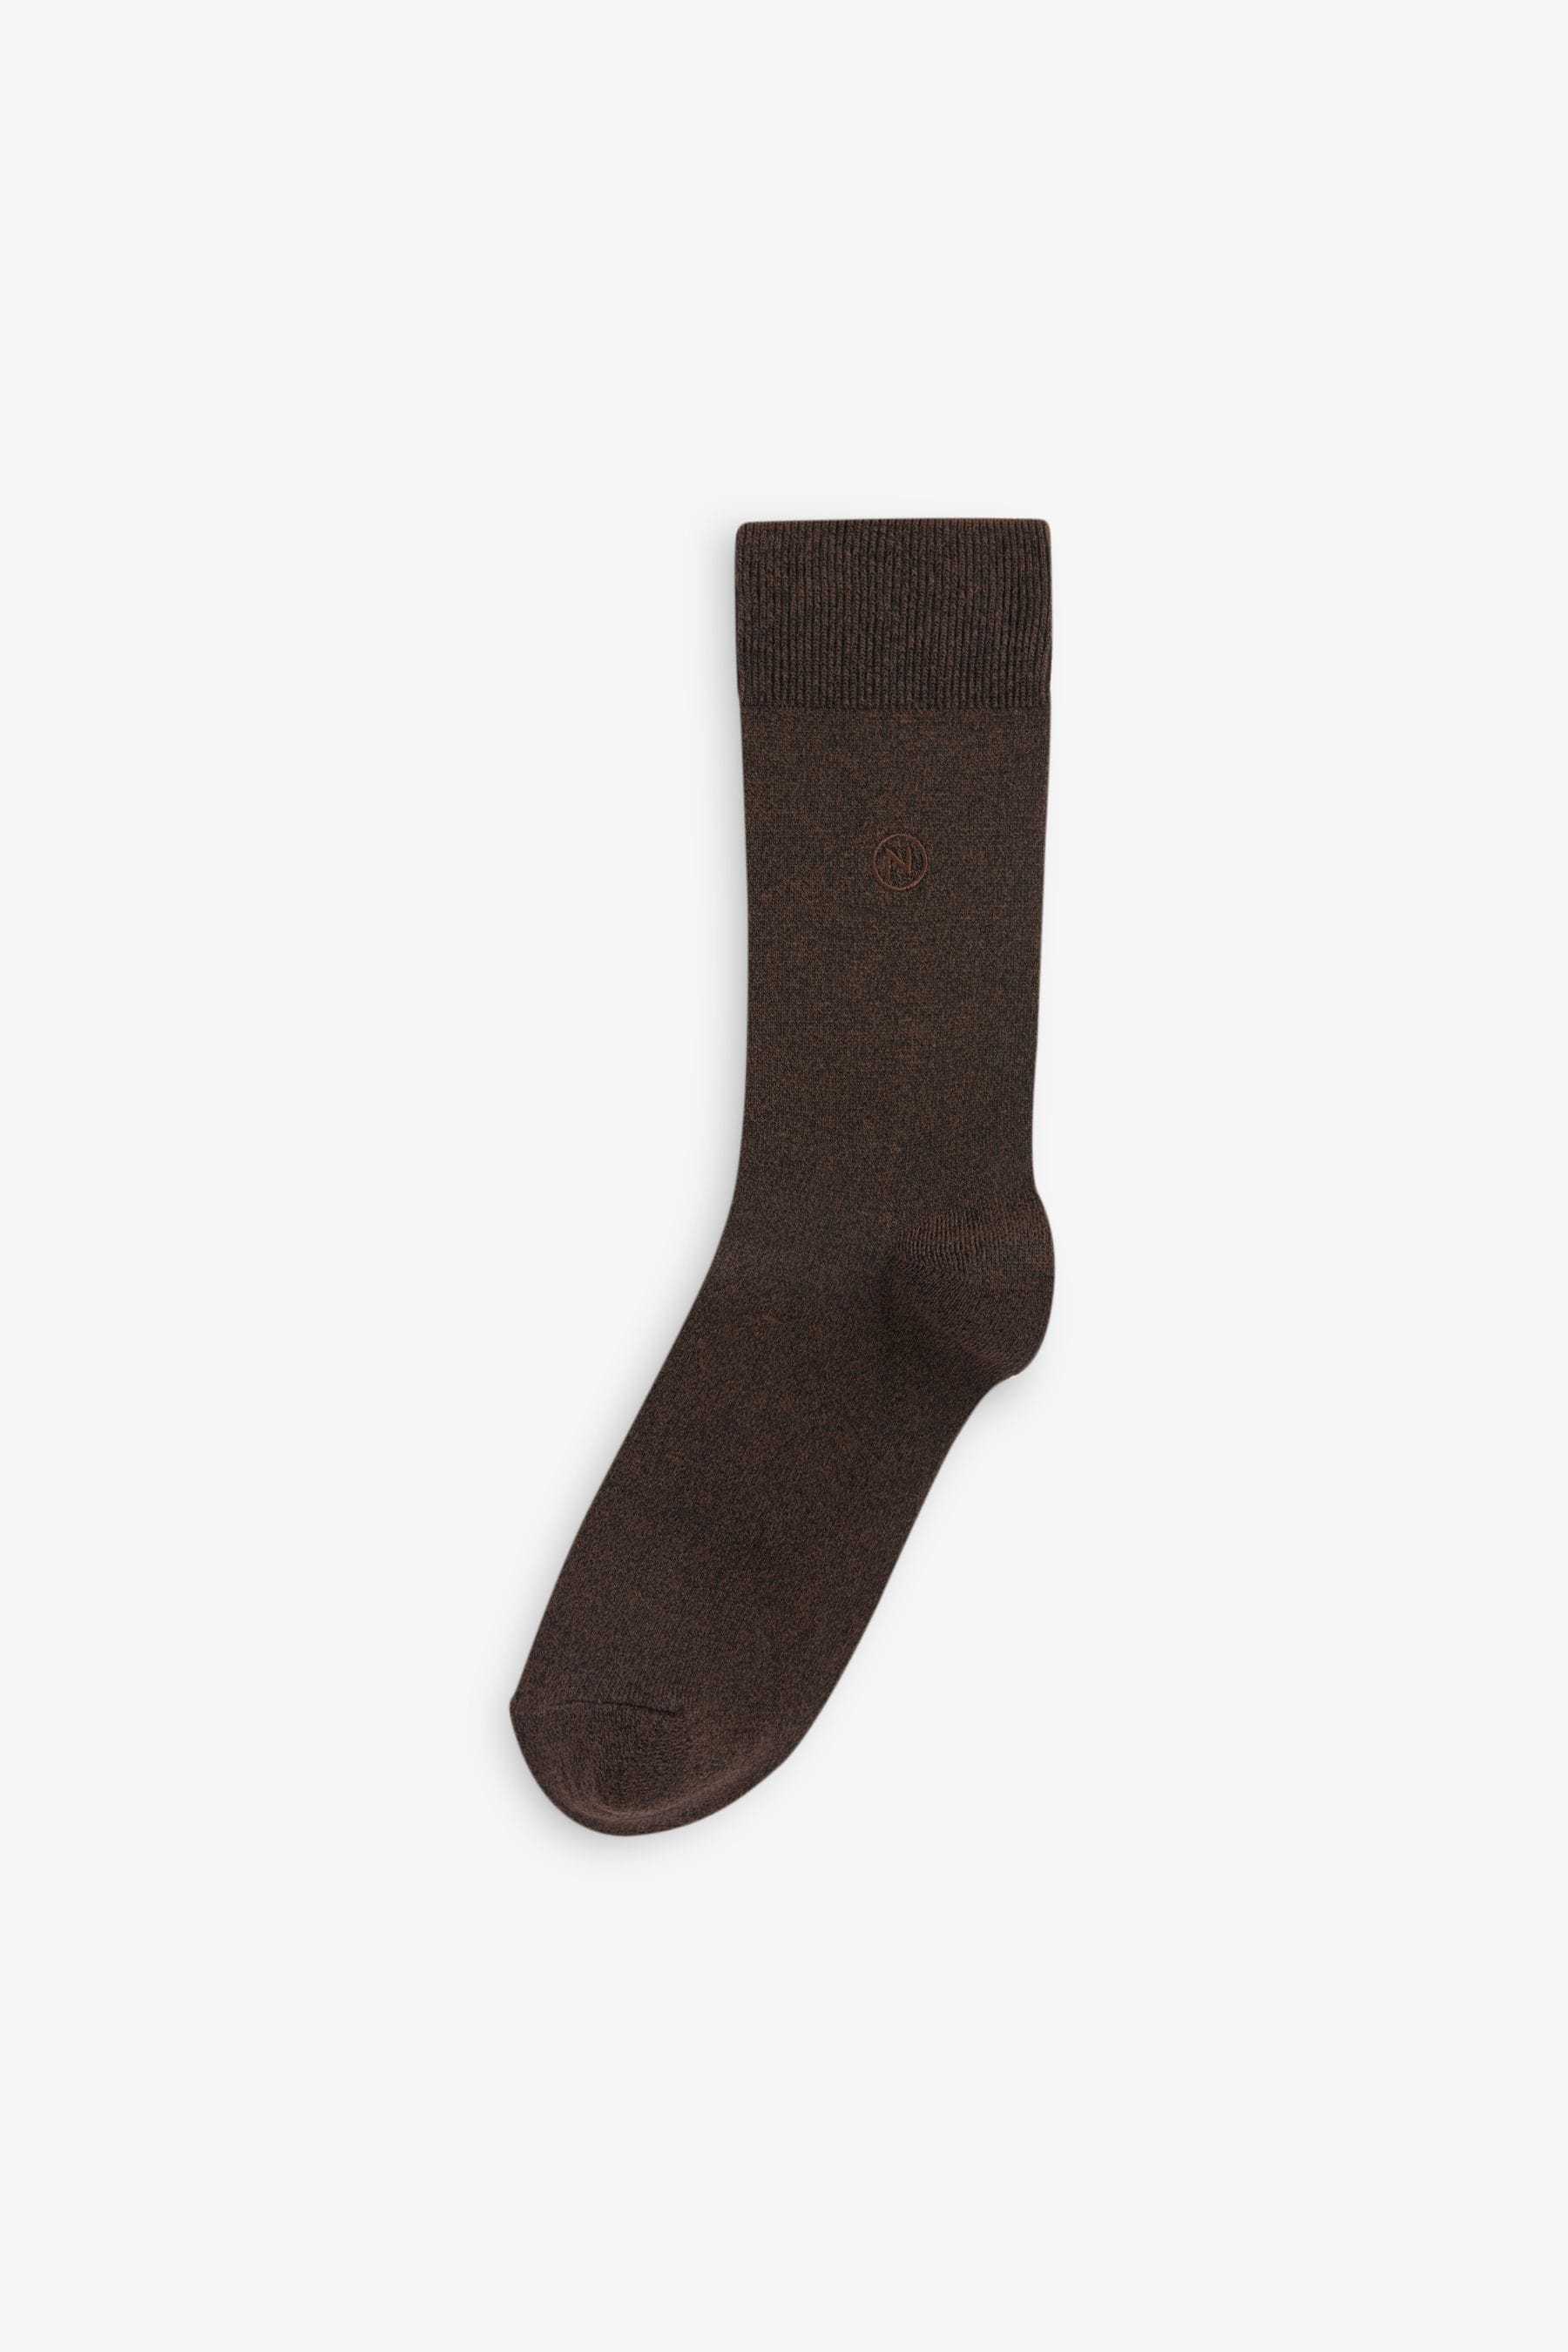 Buy Mens Lasting Fresh Socks from Next Ireland